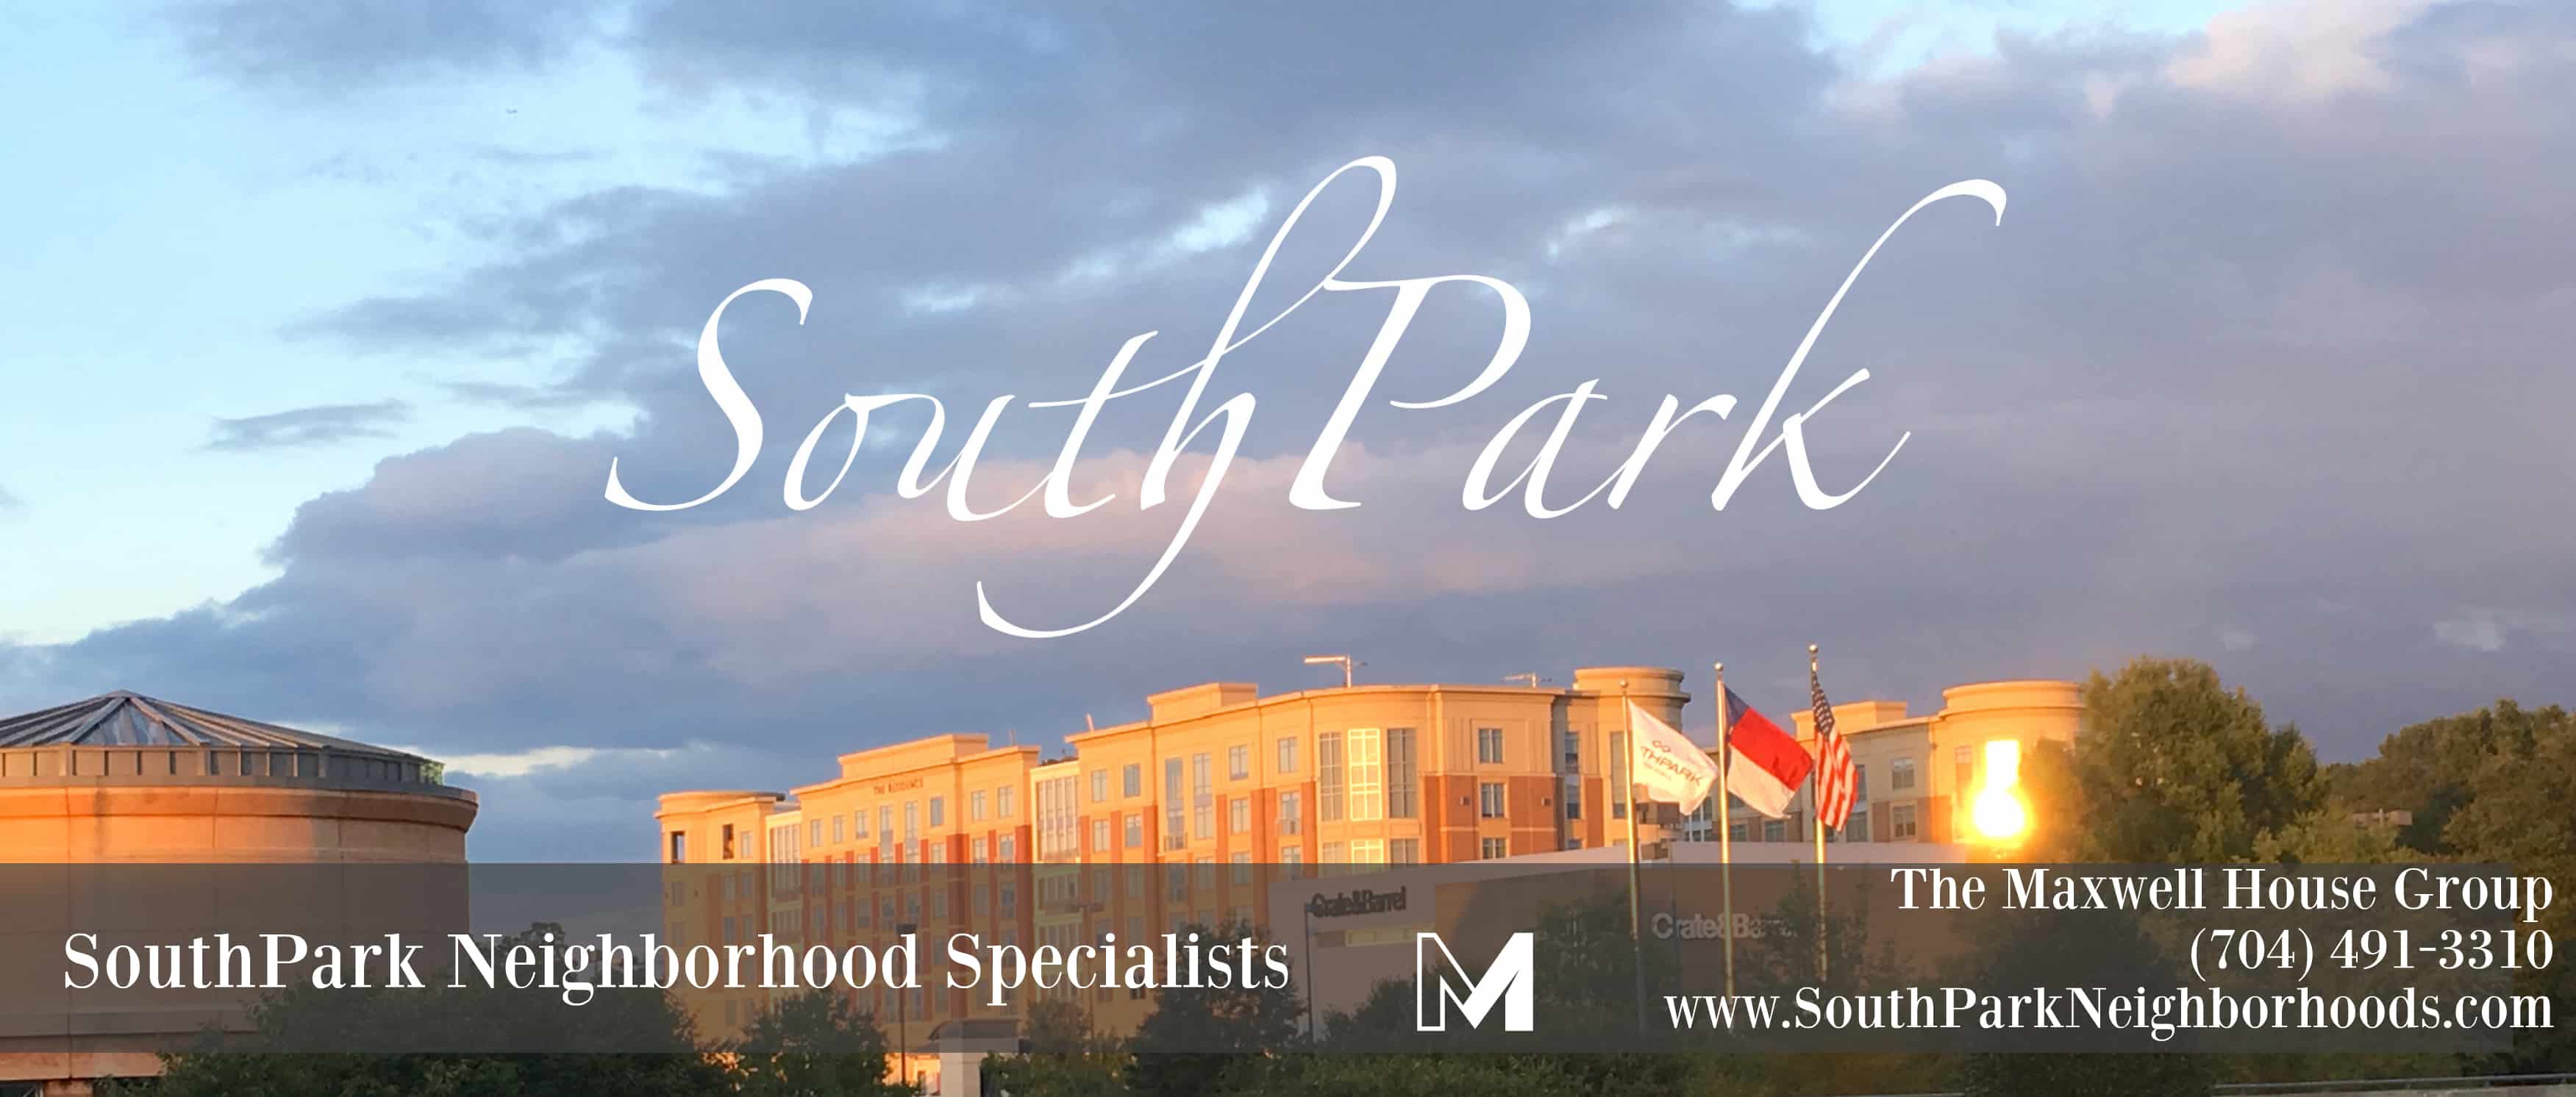 SouthPark Neighborhood Specialists